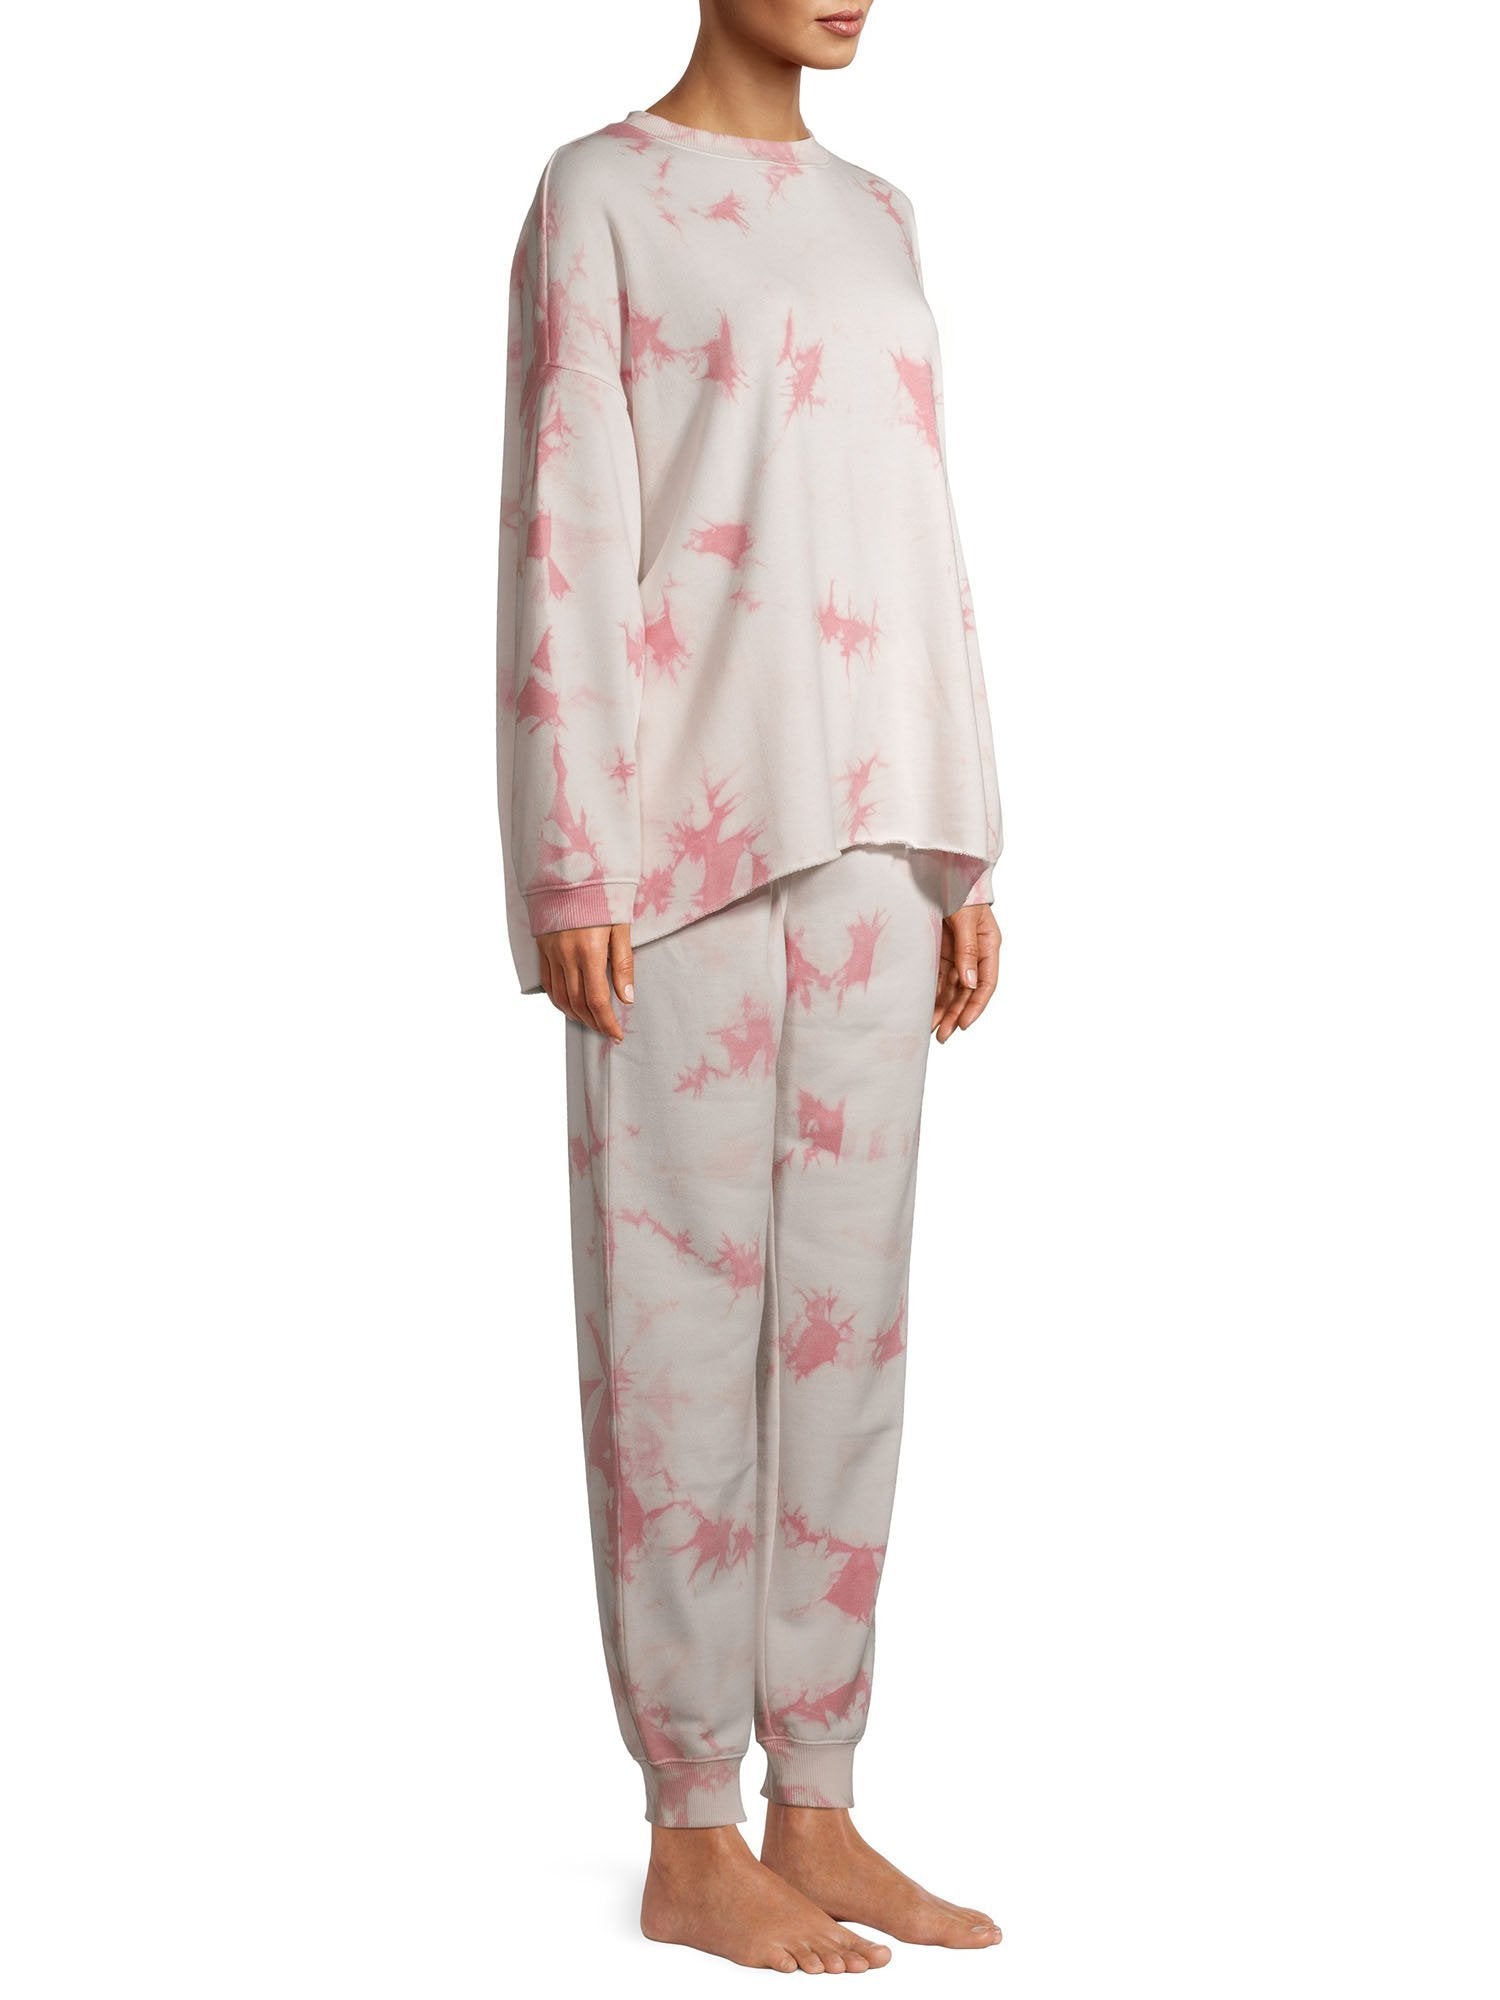 Women's Long Sleeve Lounge Set - Pajamas - INS | Online Fashion Free Shipping Clothing, Dresses, Tops, Shoes - 03/03/2021 - DRAFT - L